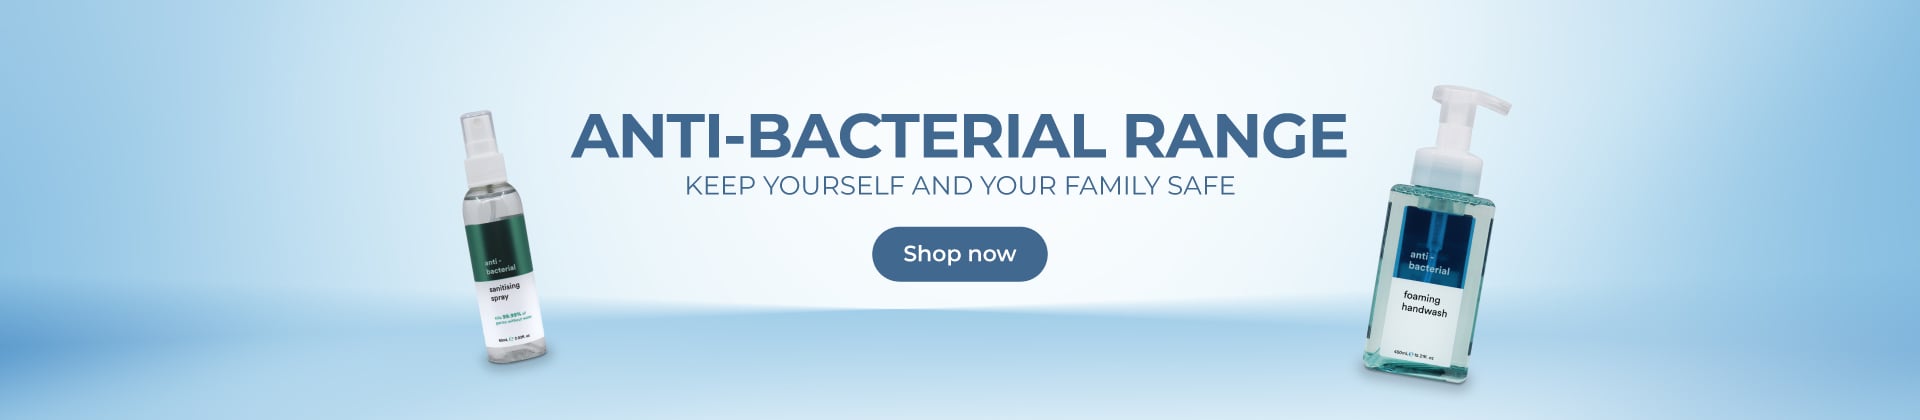 Anti-Bacterial & Sanitisers Range